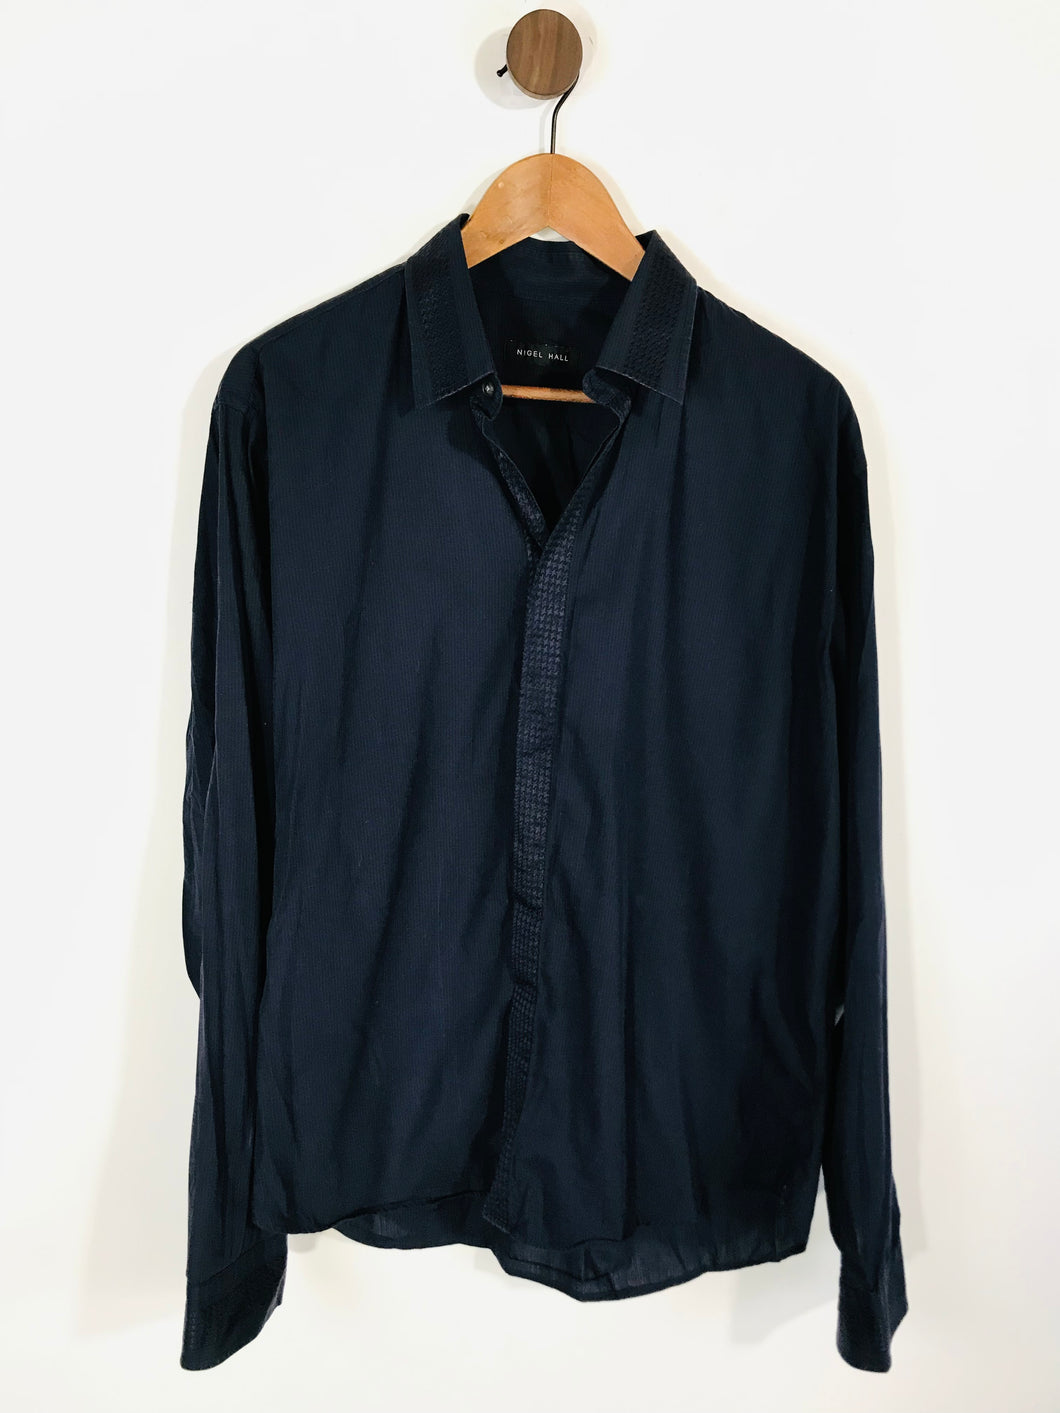 Nigel Hall Men's Cotton Striped Button-Up Shirt | XL | Blue